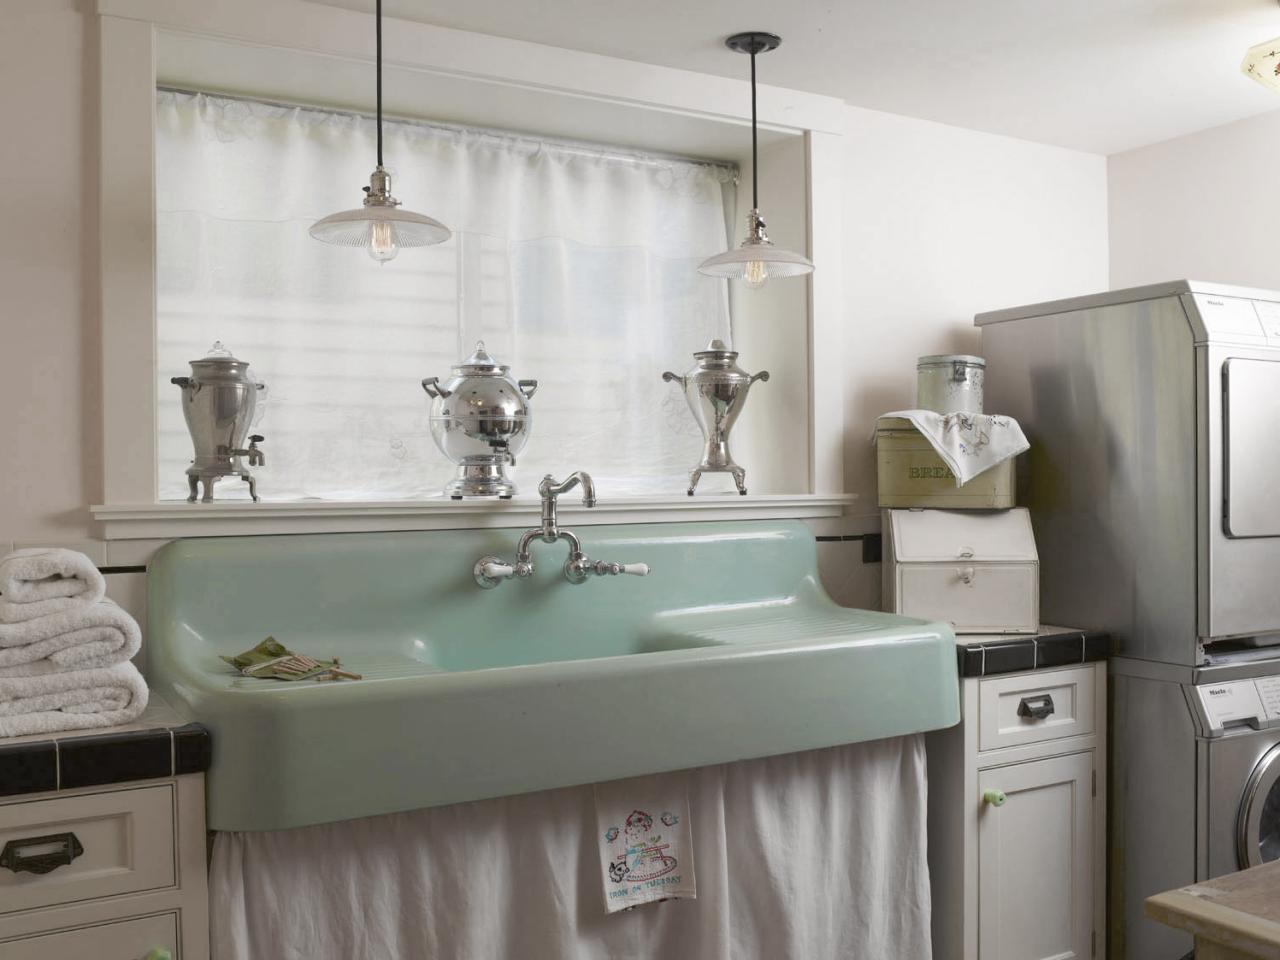 7 Stylish Laundry Room Decor Ideas HGTV's Decorating